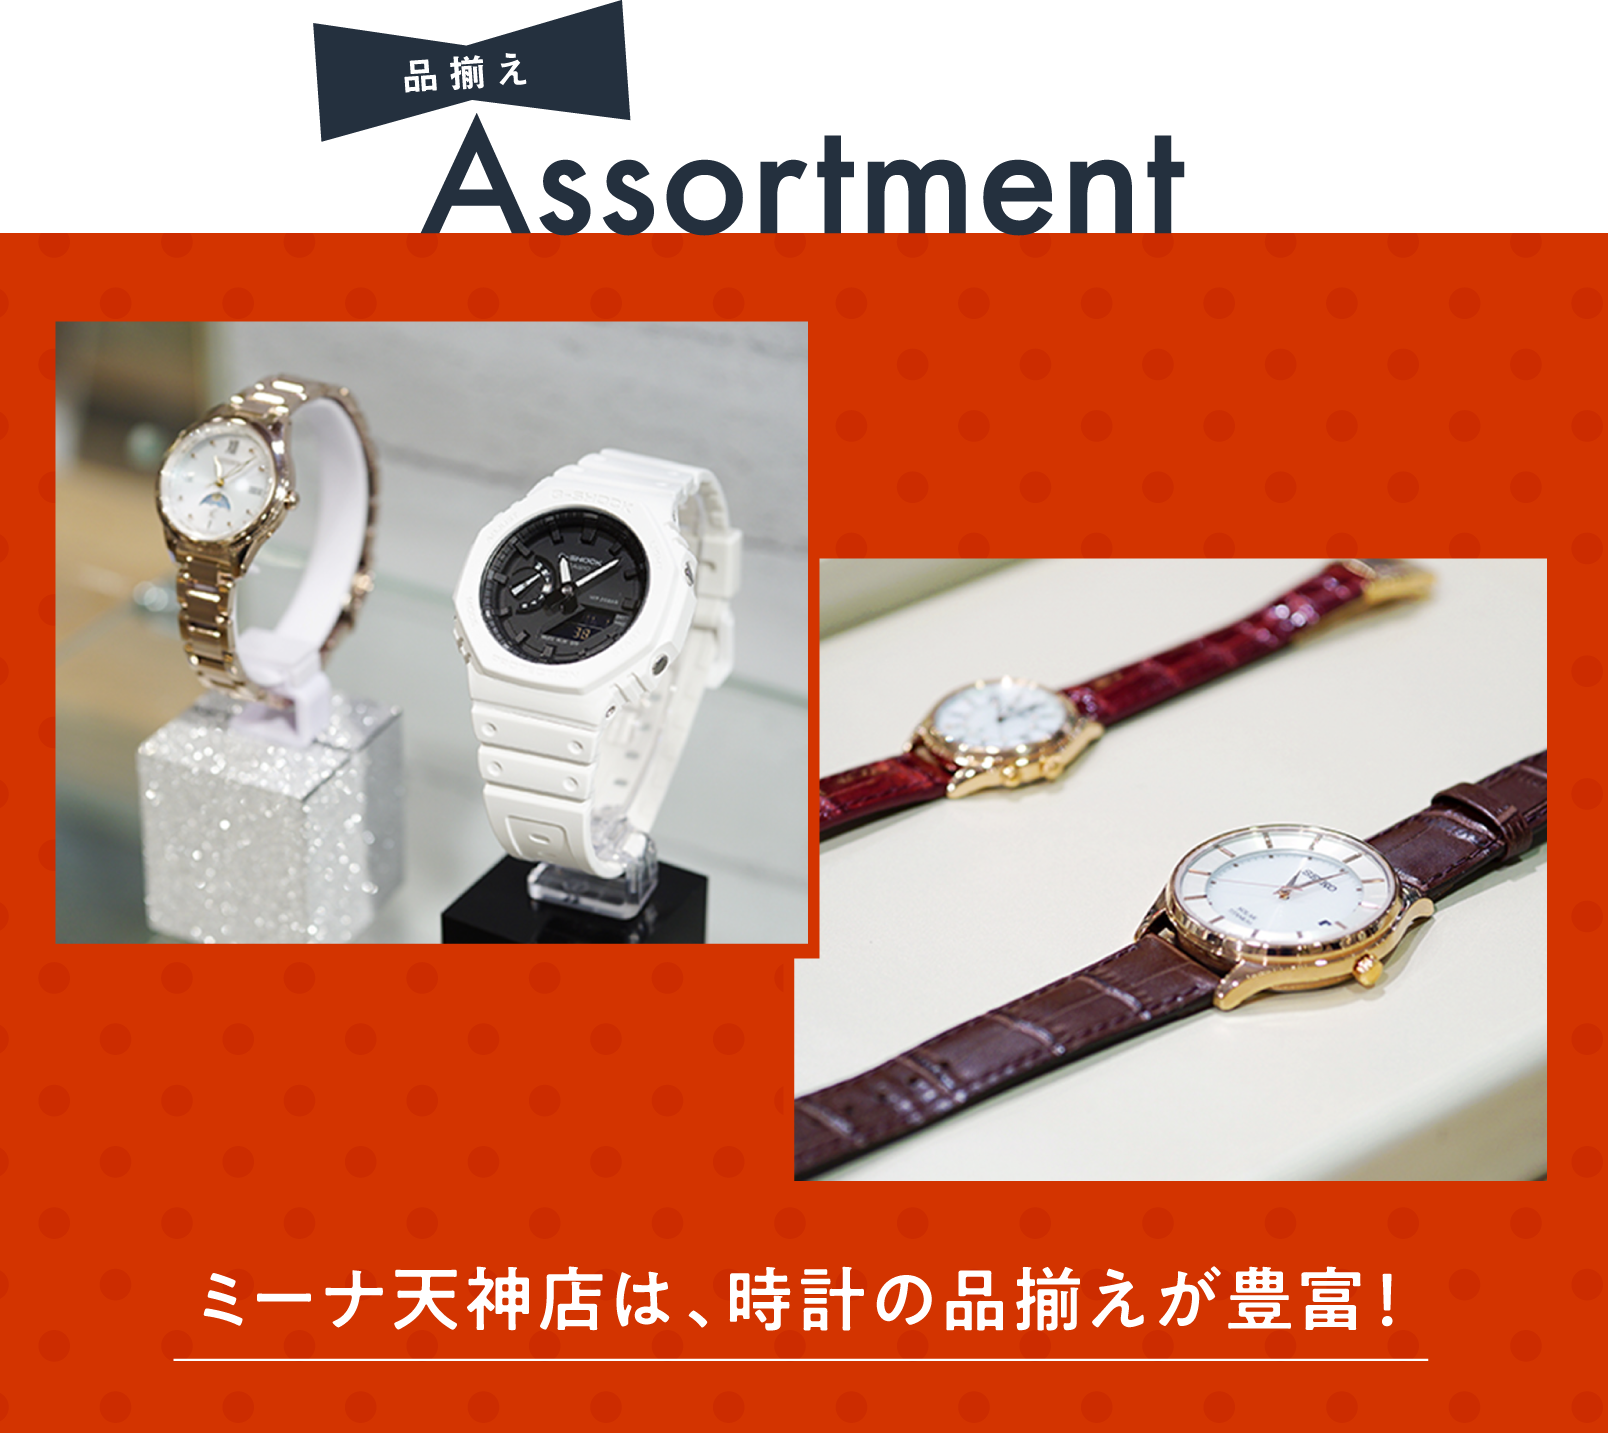 Assortment 品揃え ミーナ天神店は、時計の品揃えが豊富！ takeda megane mina tenjin clearance sale